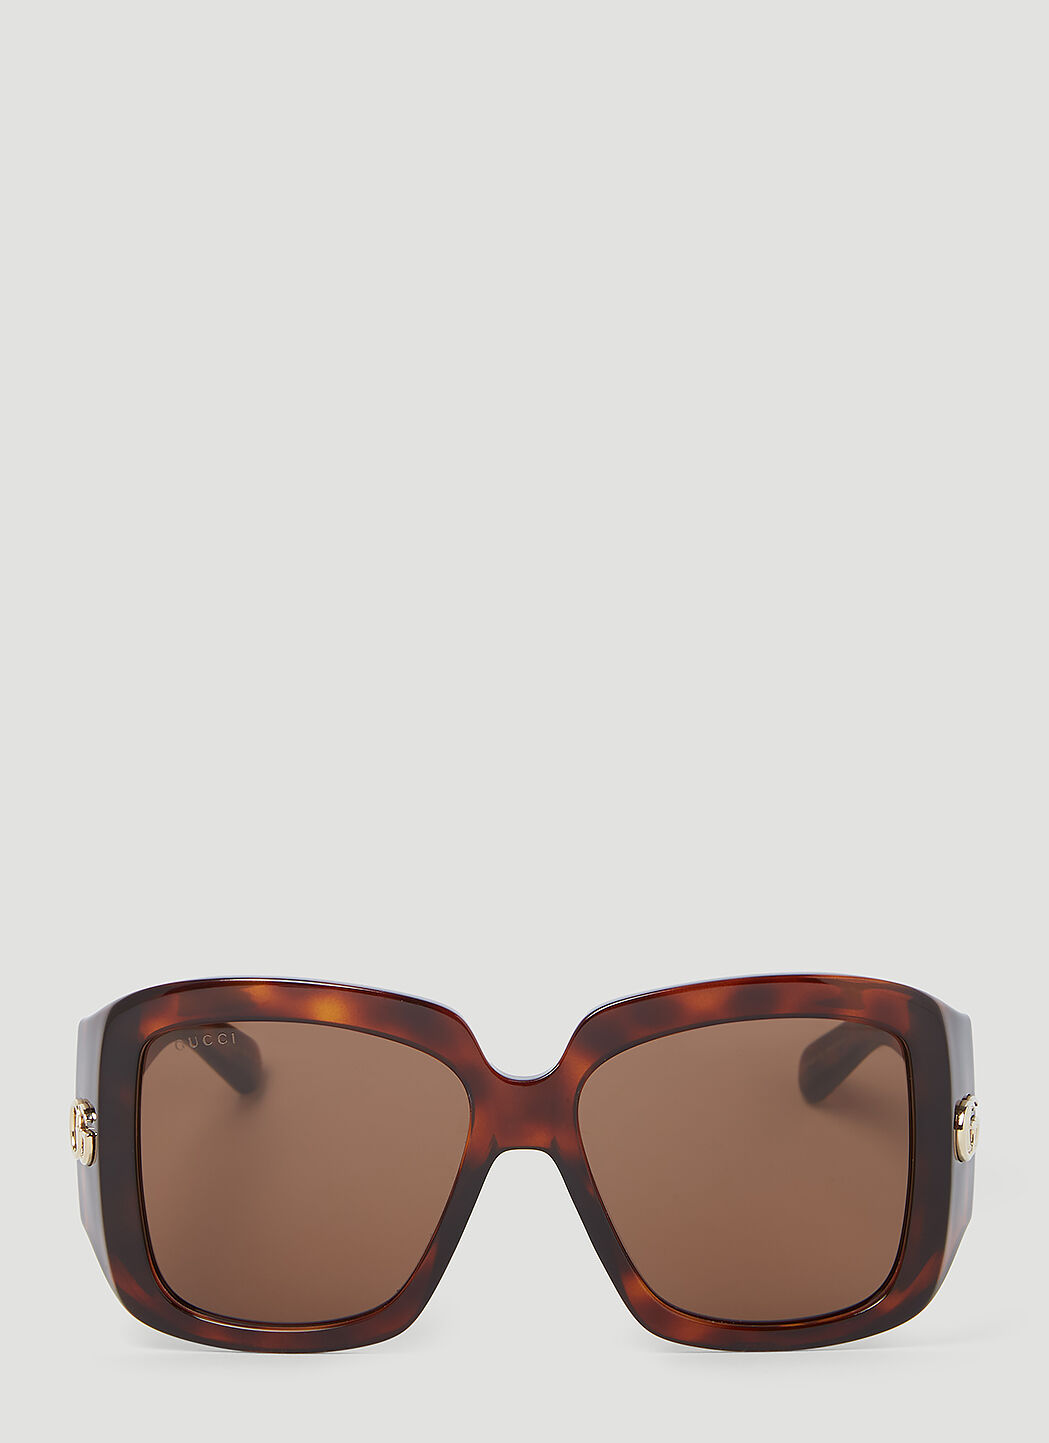 Buy Gucci Women's Sunglasses Gg 3537 S Havana 5E7Ha Gg3537 S One Size  Havana Brown Crystal at Amazon.in